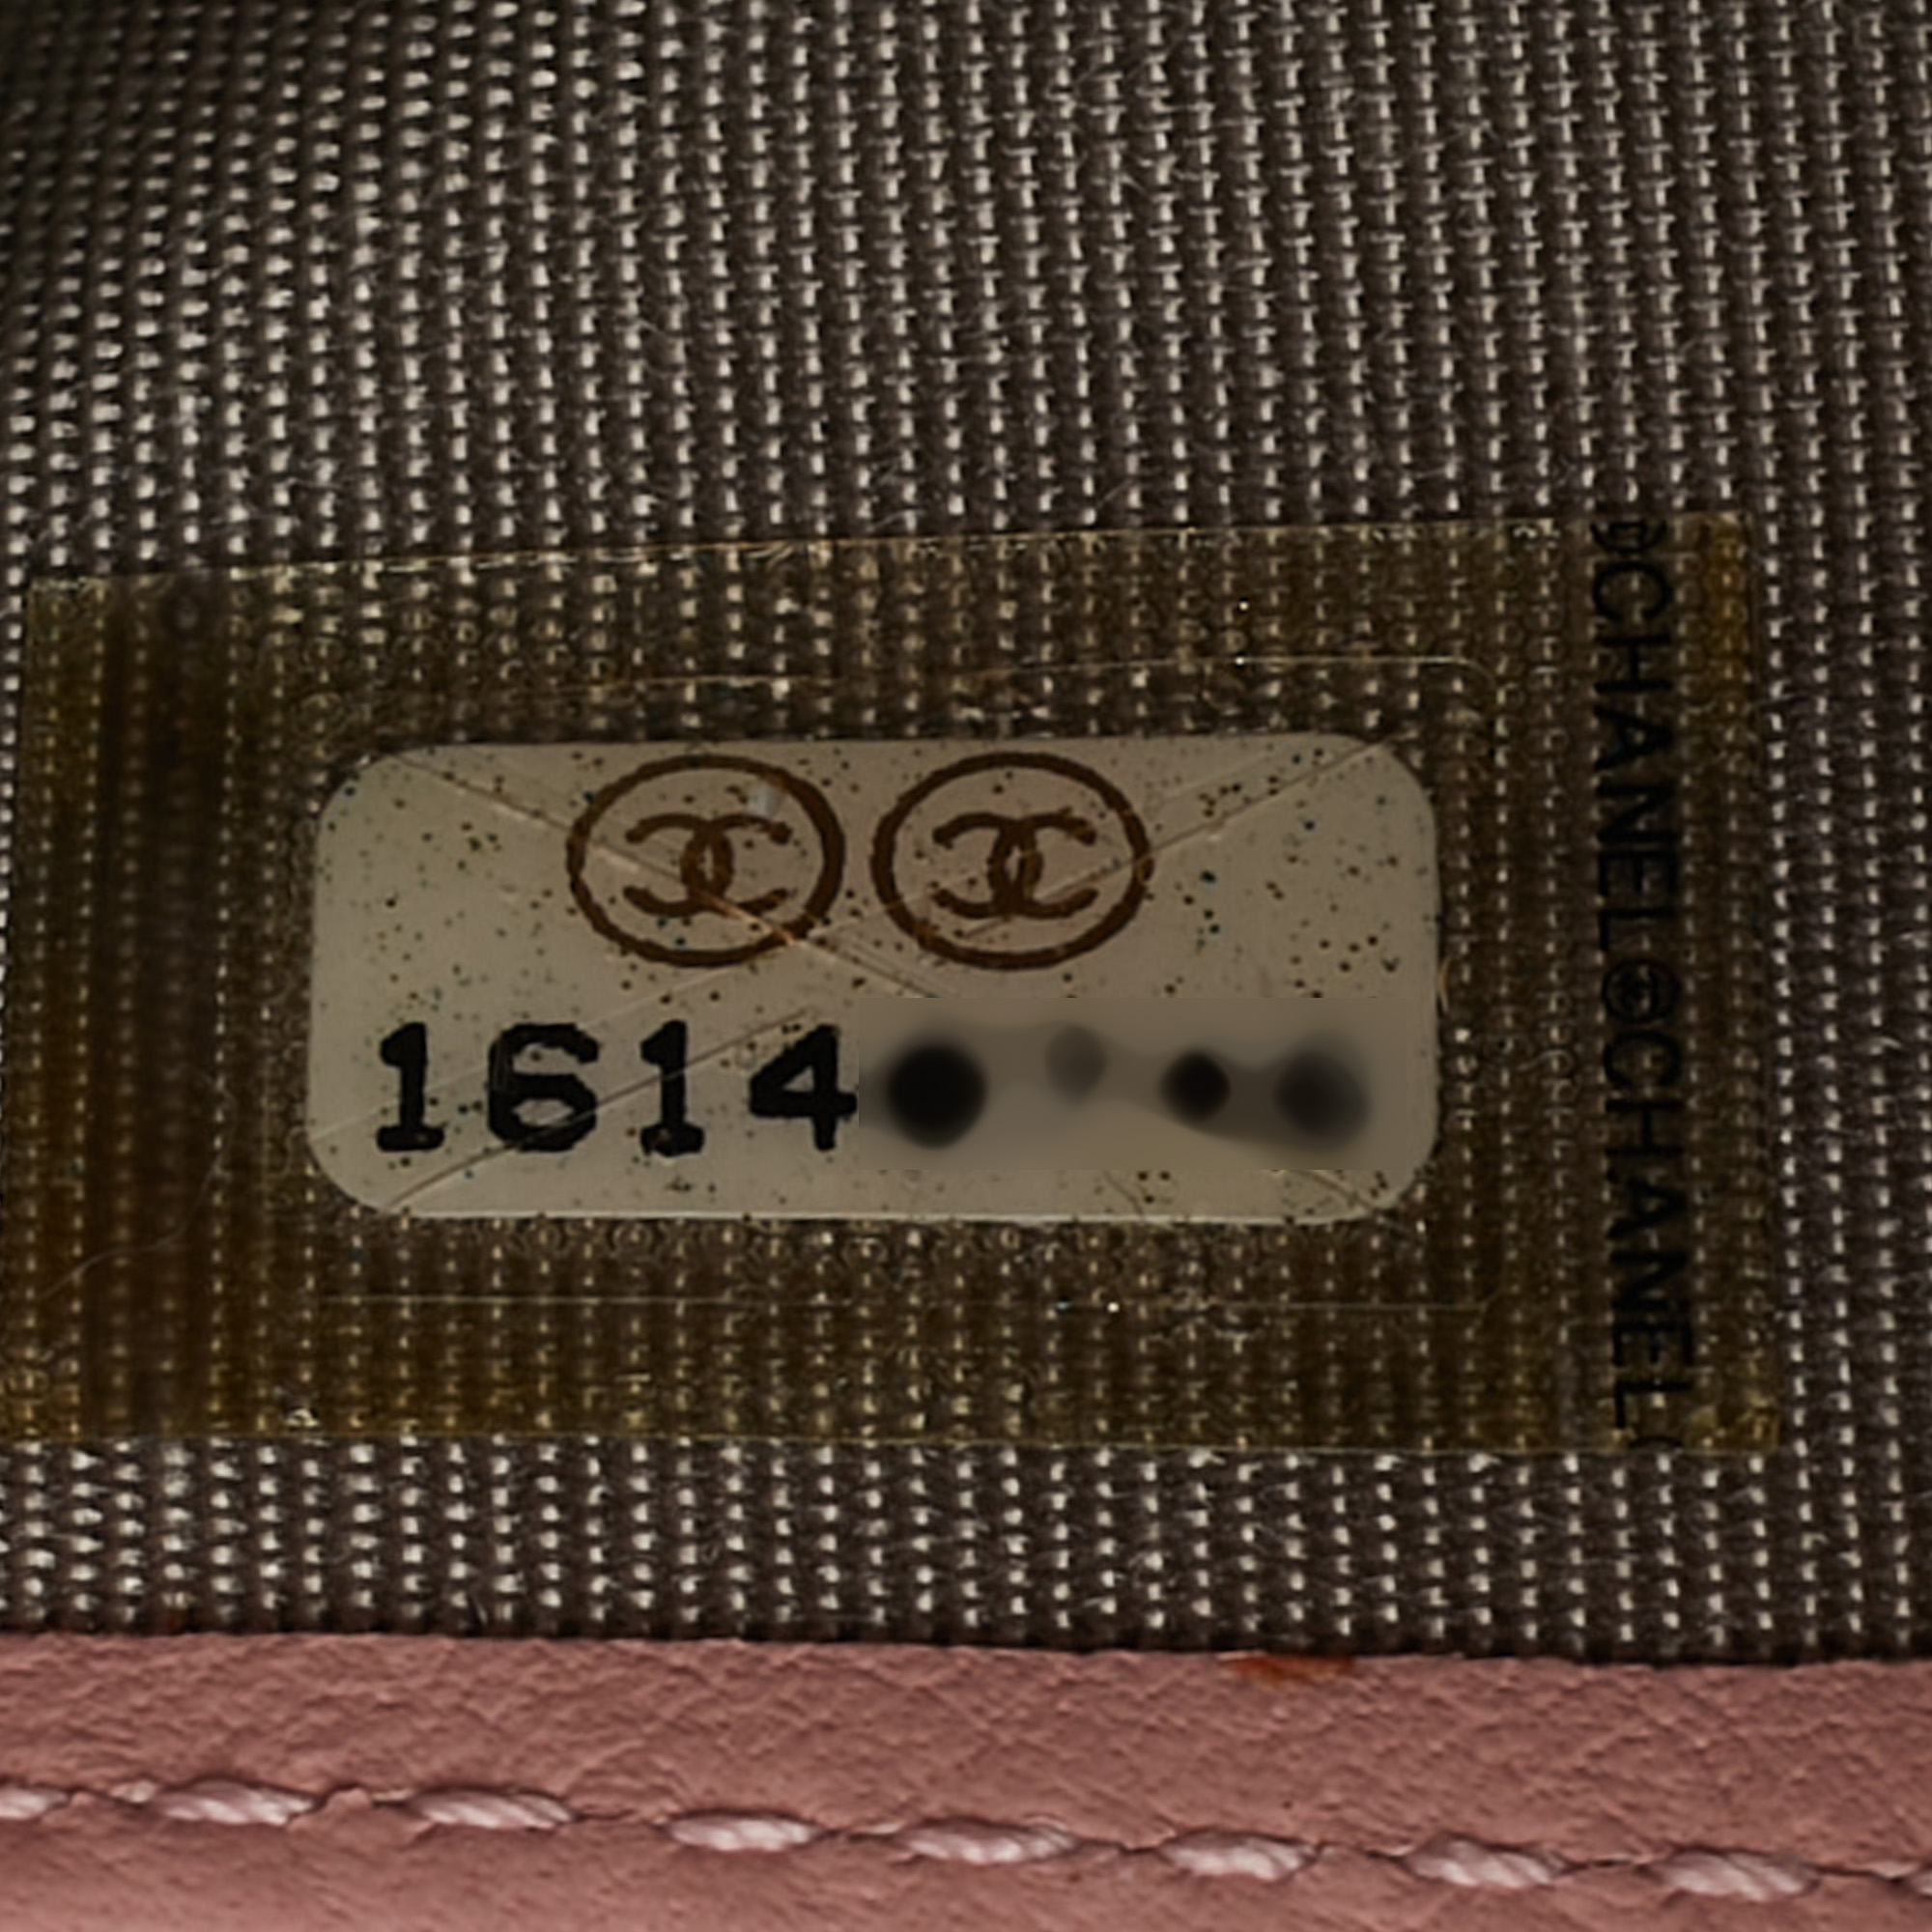 Chanel Pink Caviar Leather CC Zip Around Wallet